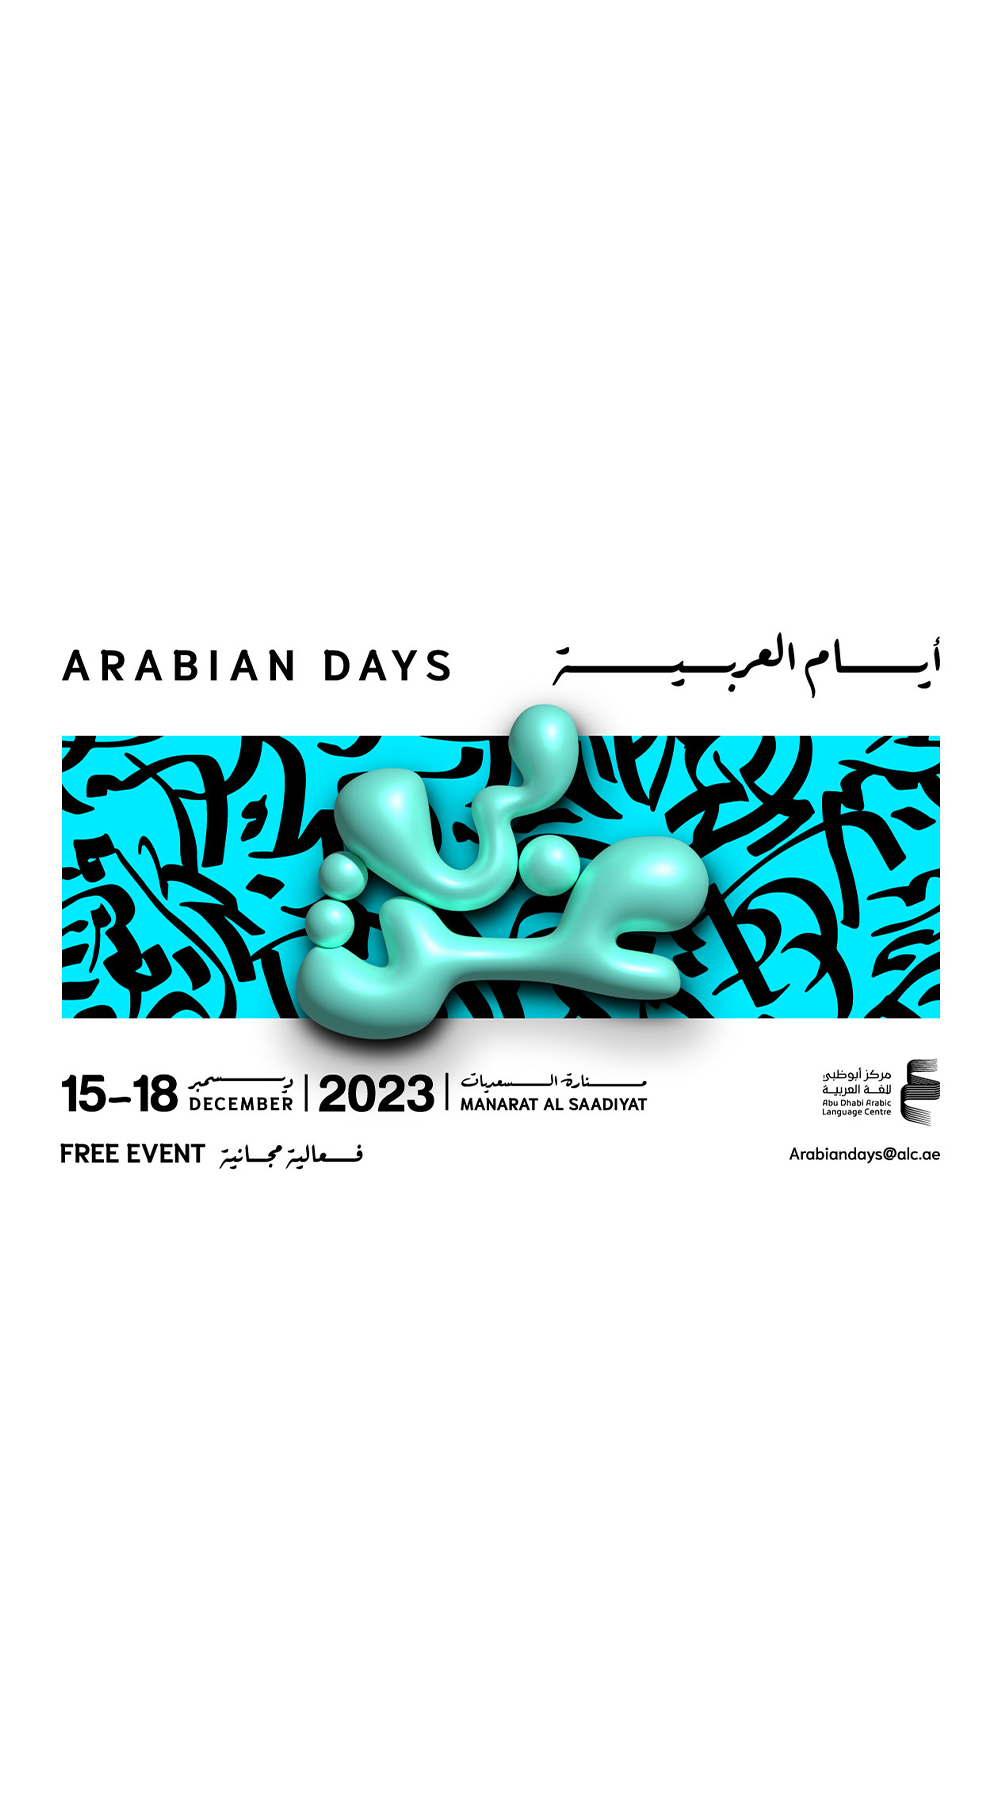 Arabian Days - 15 to 18 December at Manarat Al Saadiyat